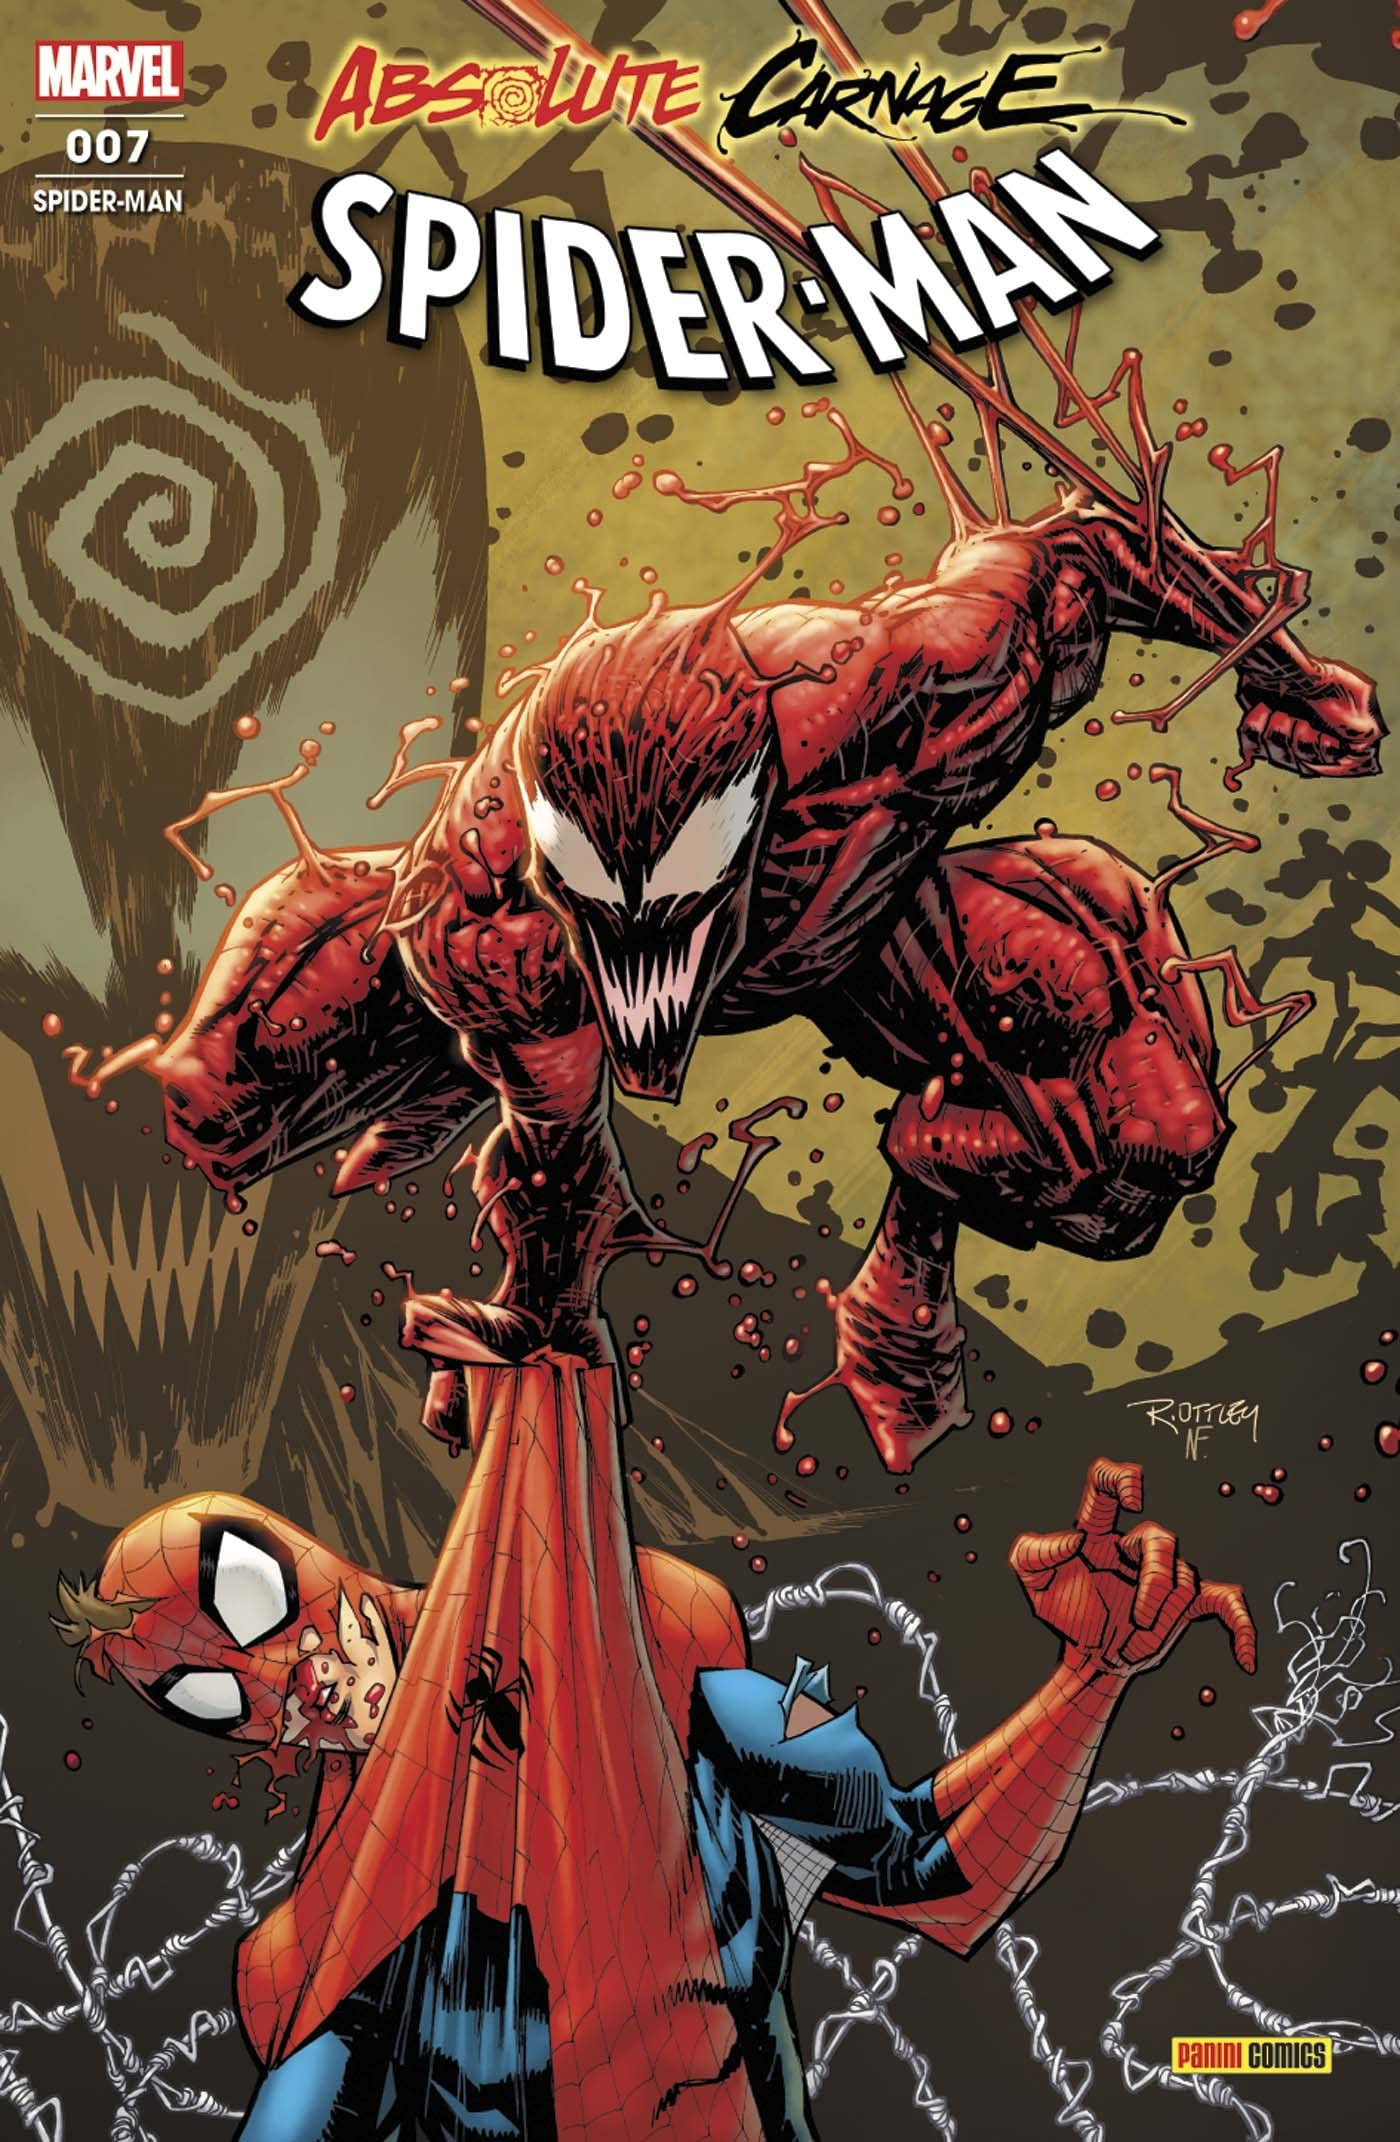 Spider-Man, n° 7. Absolute Carnage